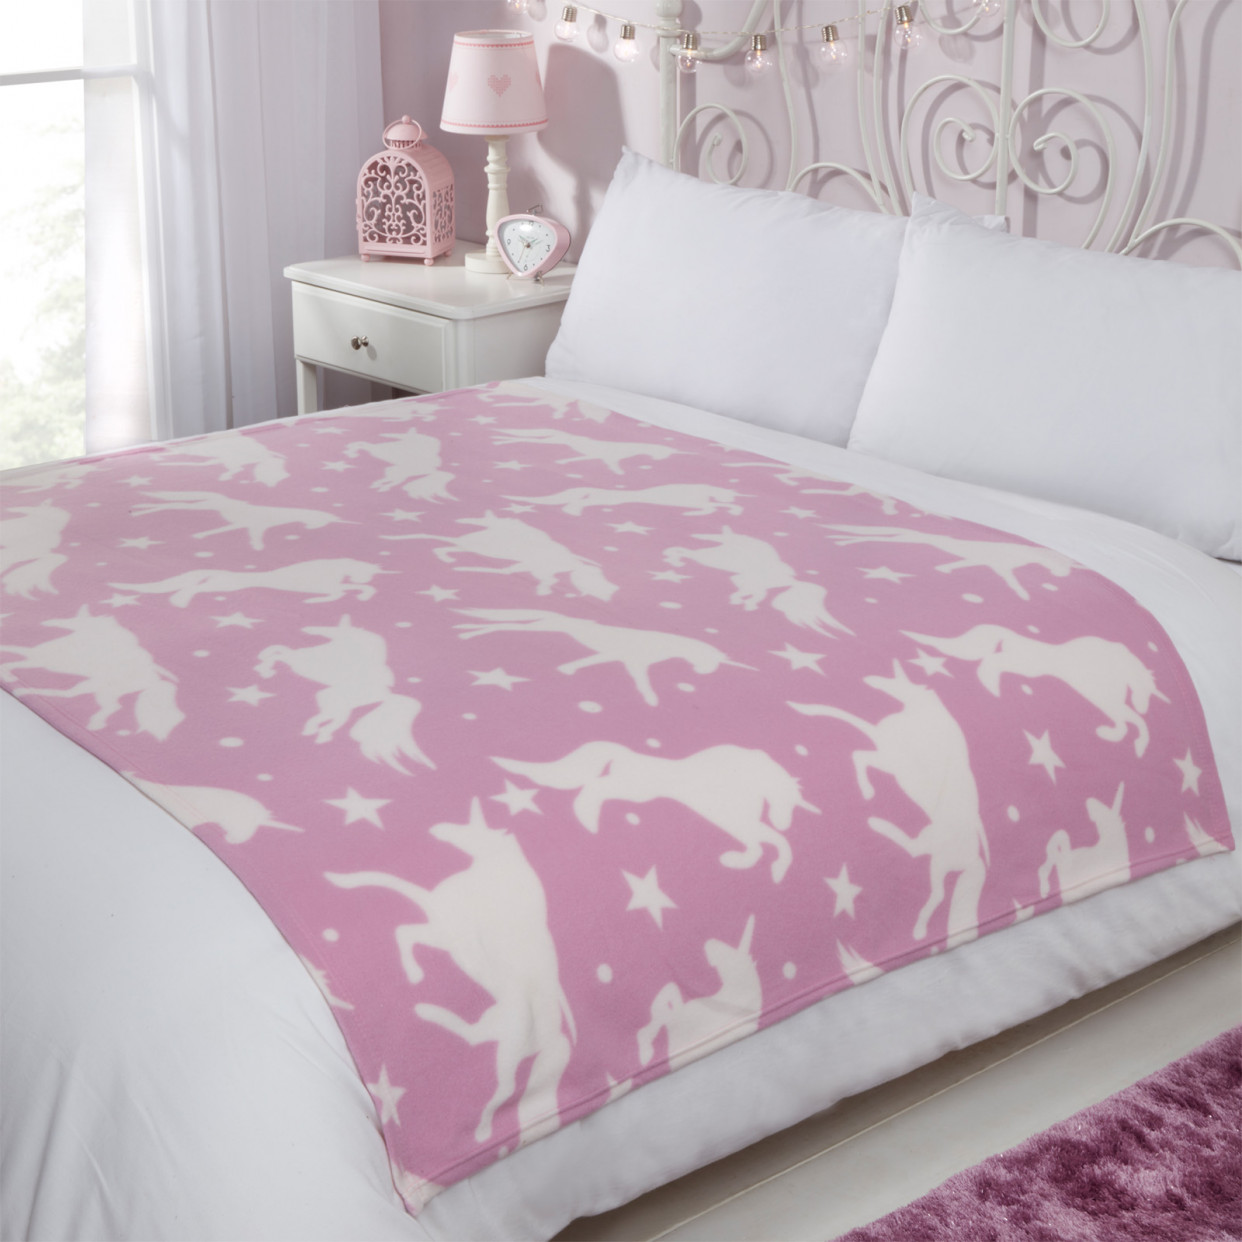 Dreamscene Fleece Blanket 120x150cm - Unicorn Pink>